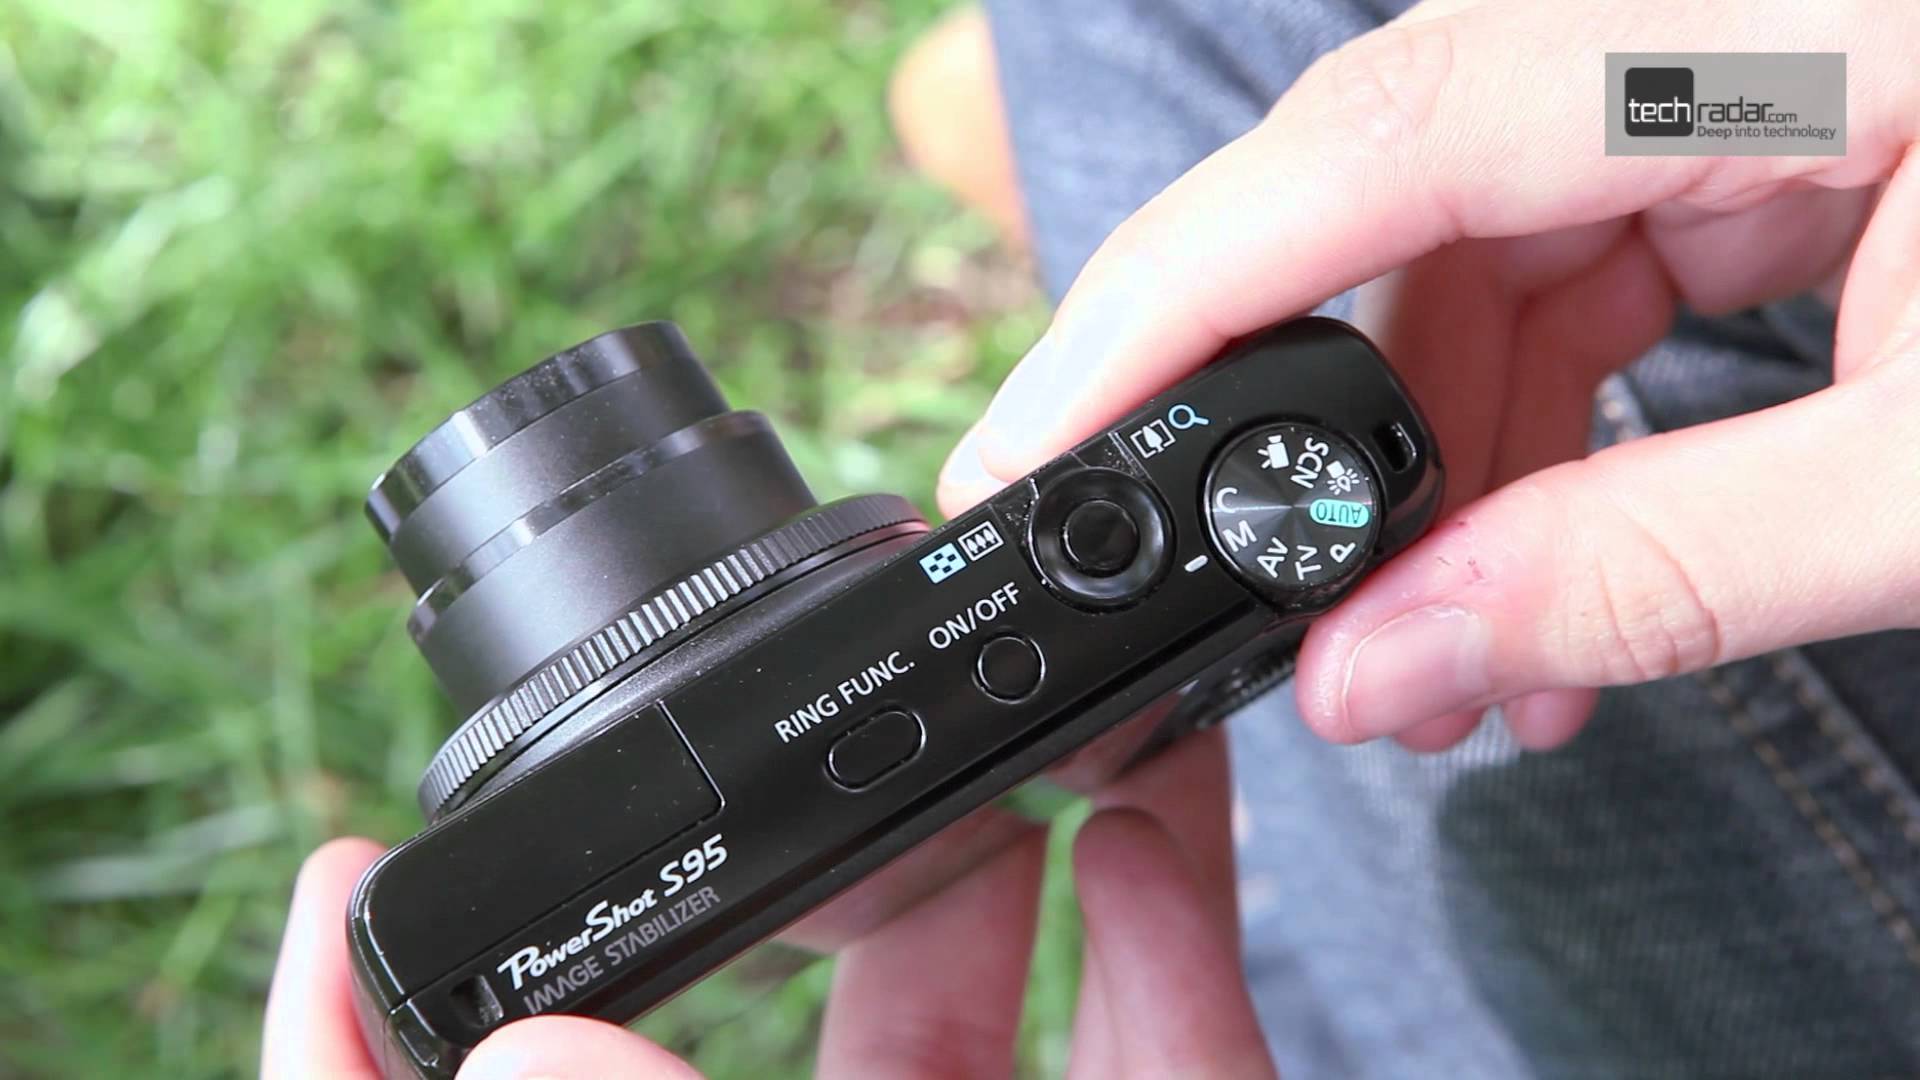 Canon Powershot S95 Best compact cameras from Techradar.com